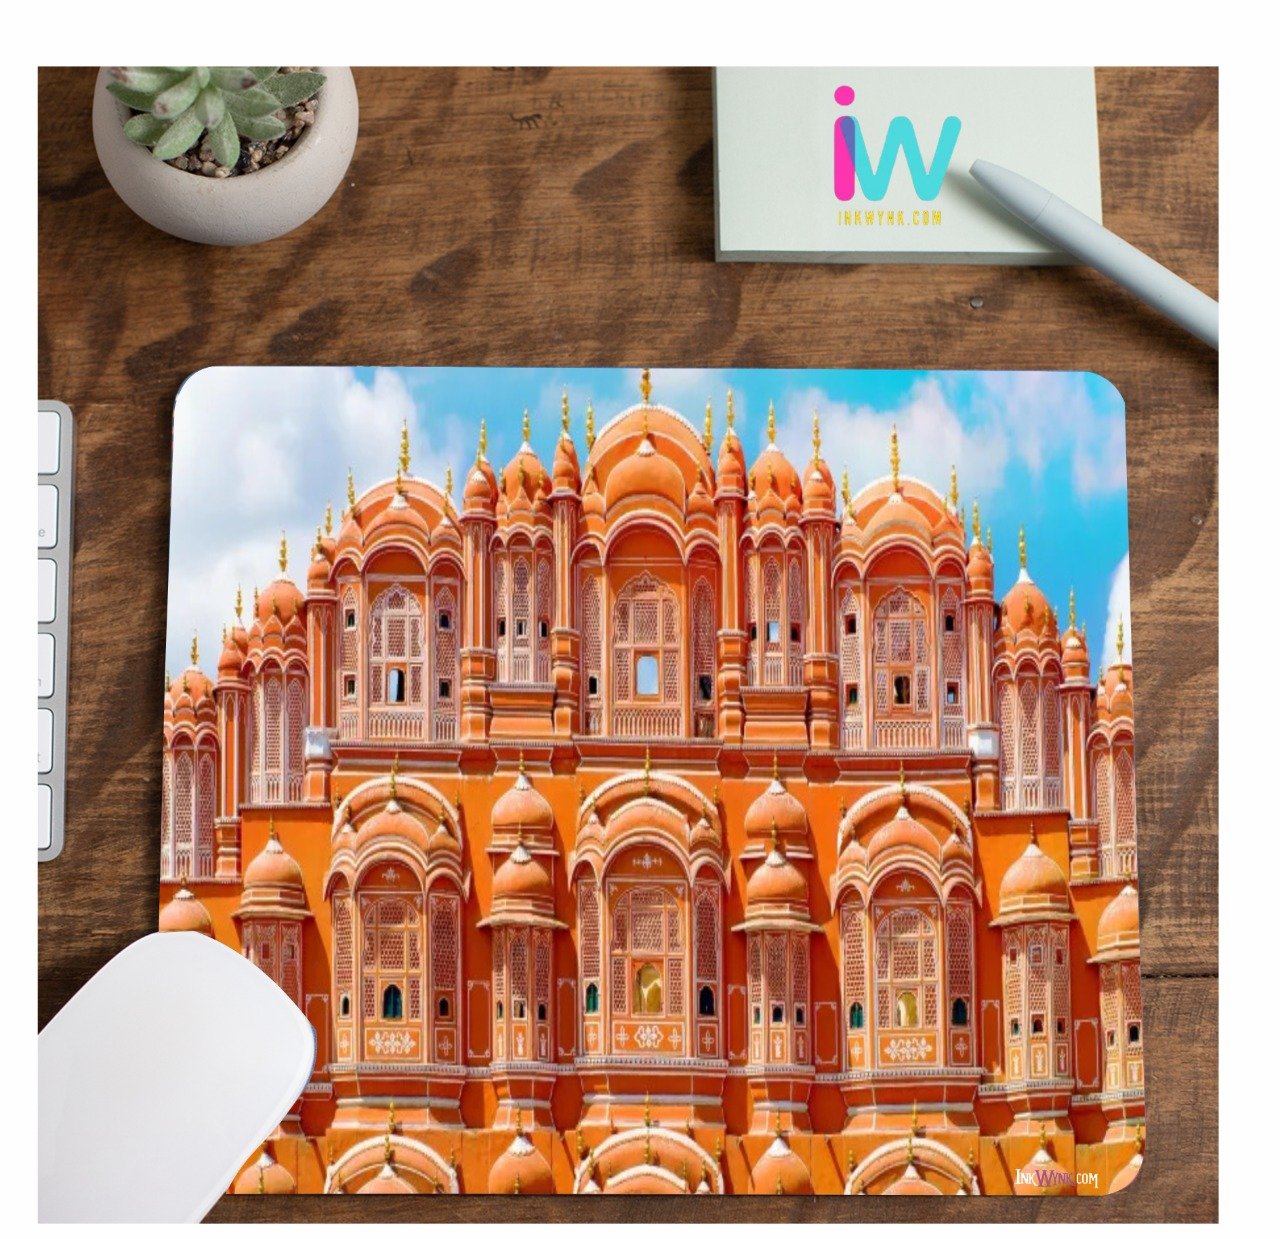 Jantar Mantar - Jaipur Non Slip Mouse Pad For Office